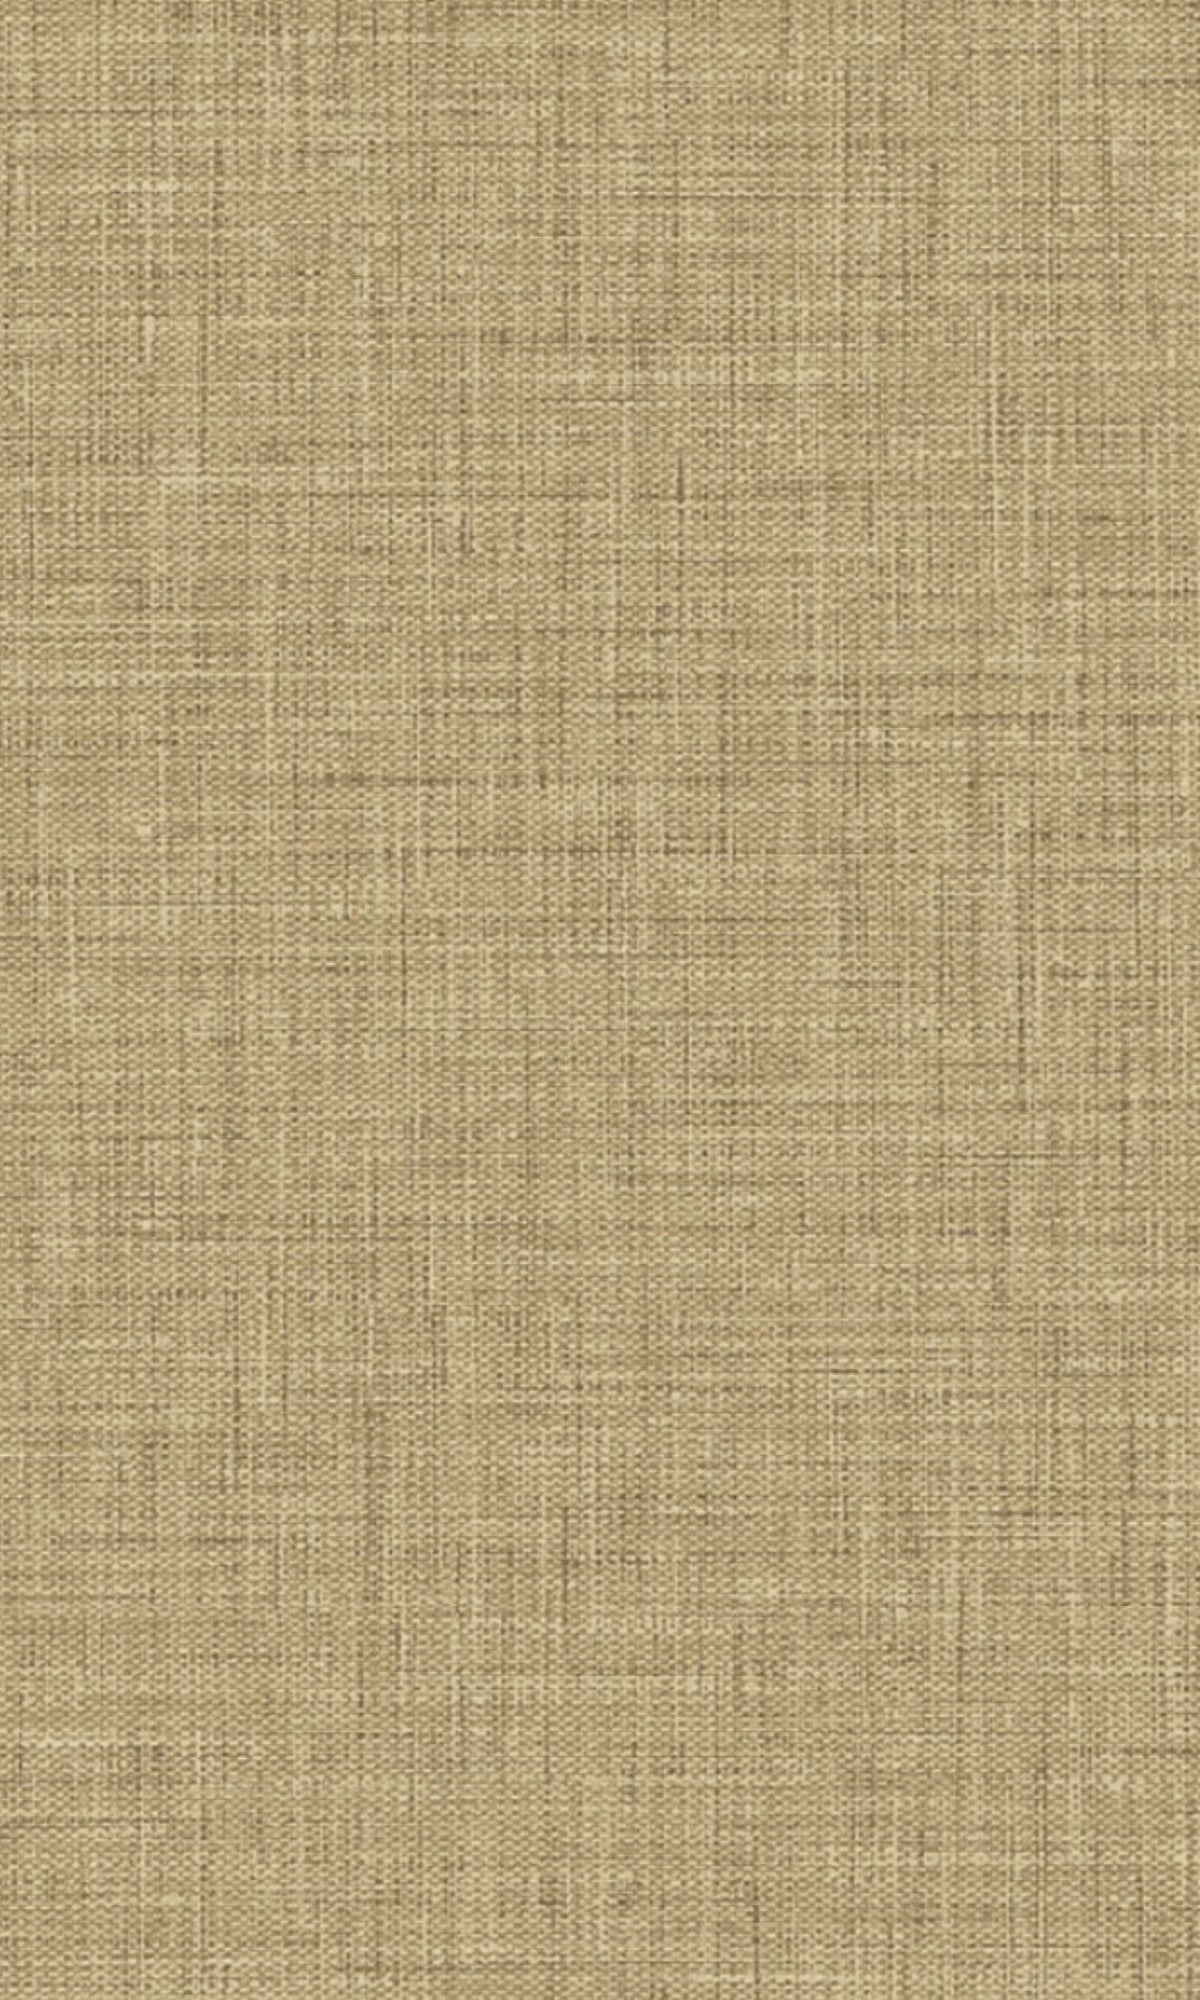 Driftwood Fabric Like Textured Vinyl Commercial Wallpaper C7601